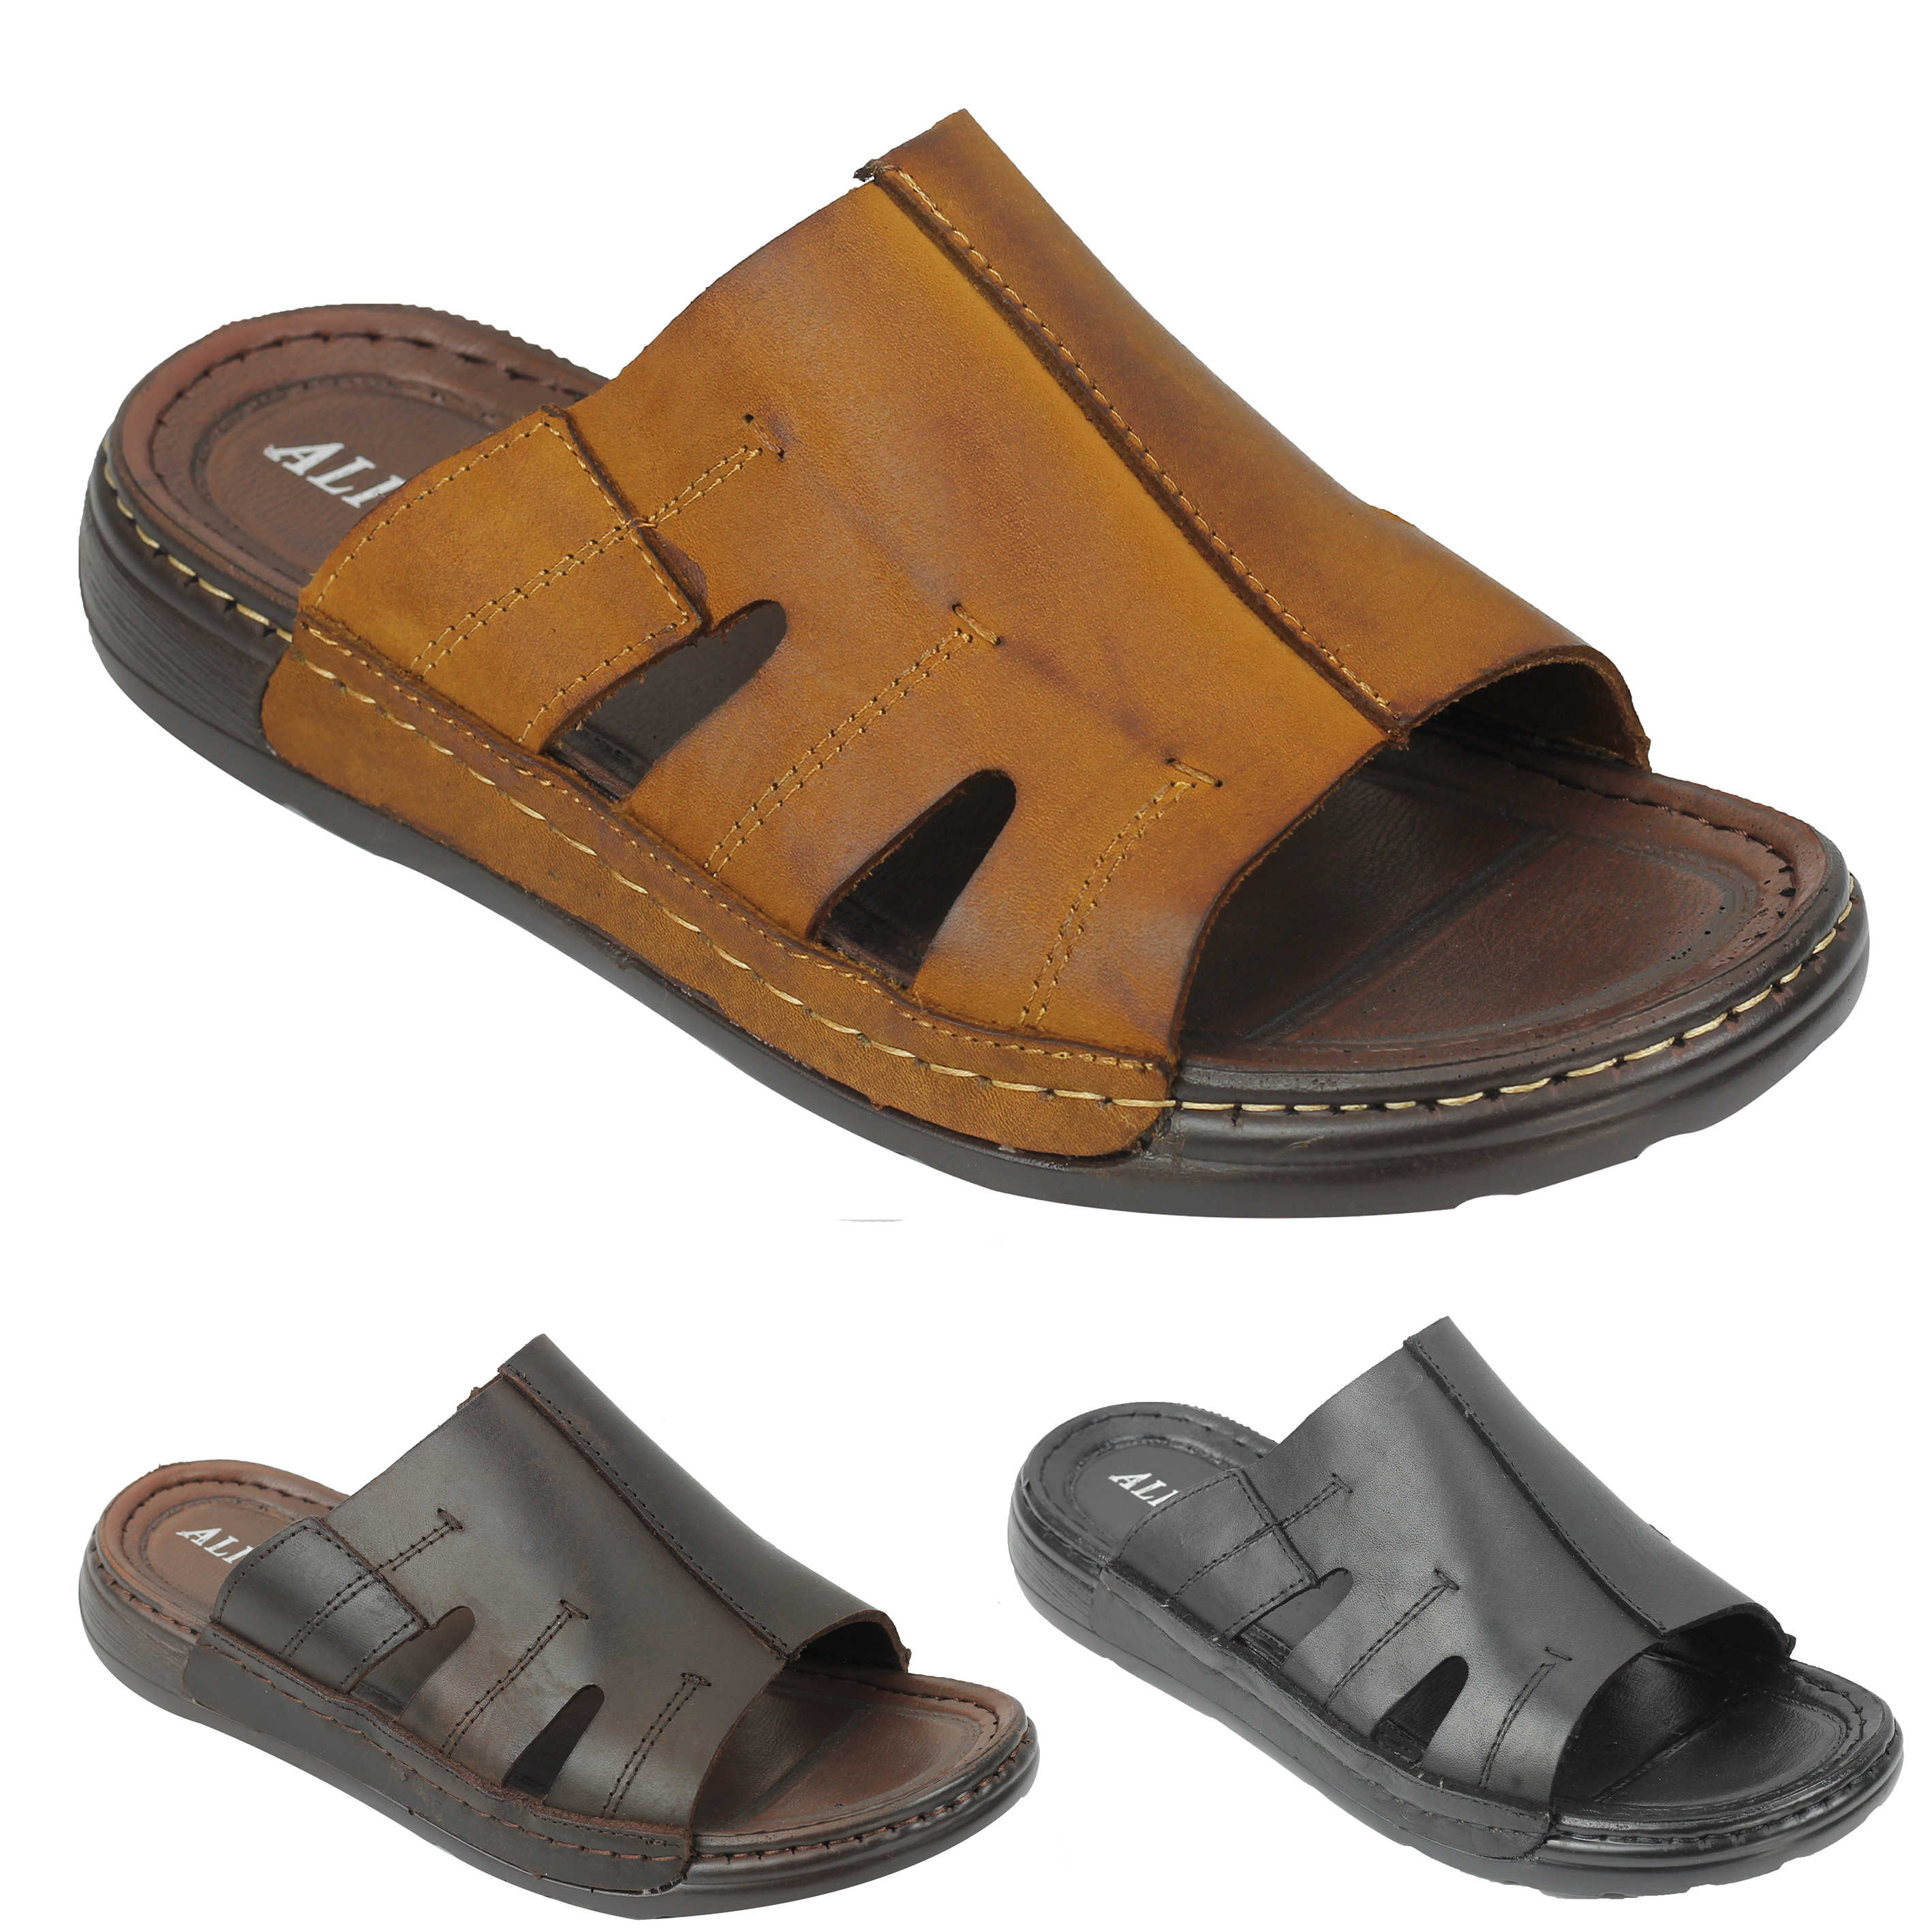 mens leather sandals uk